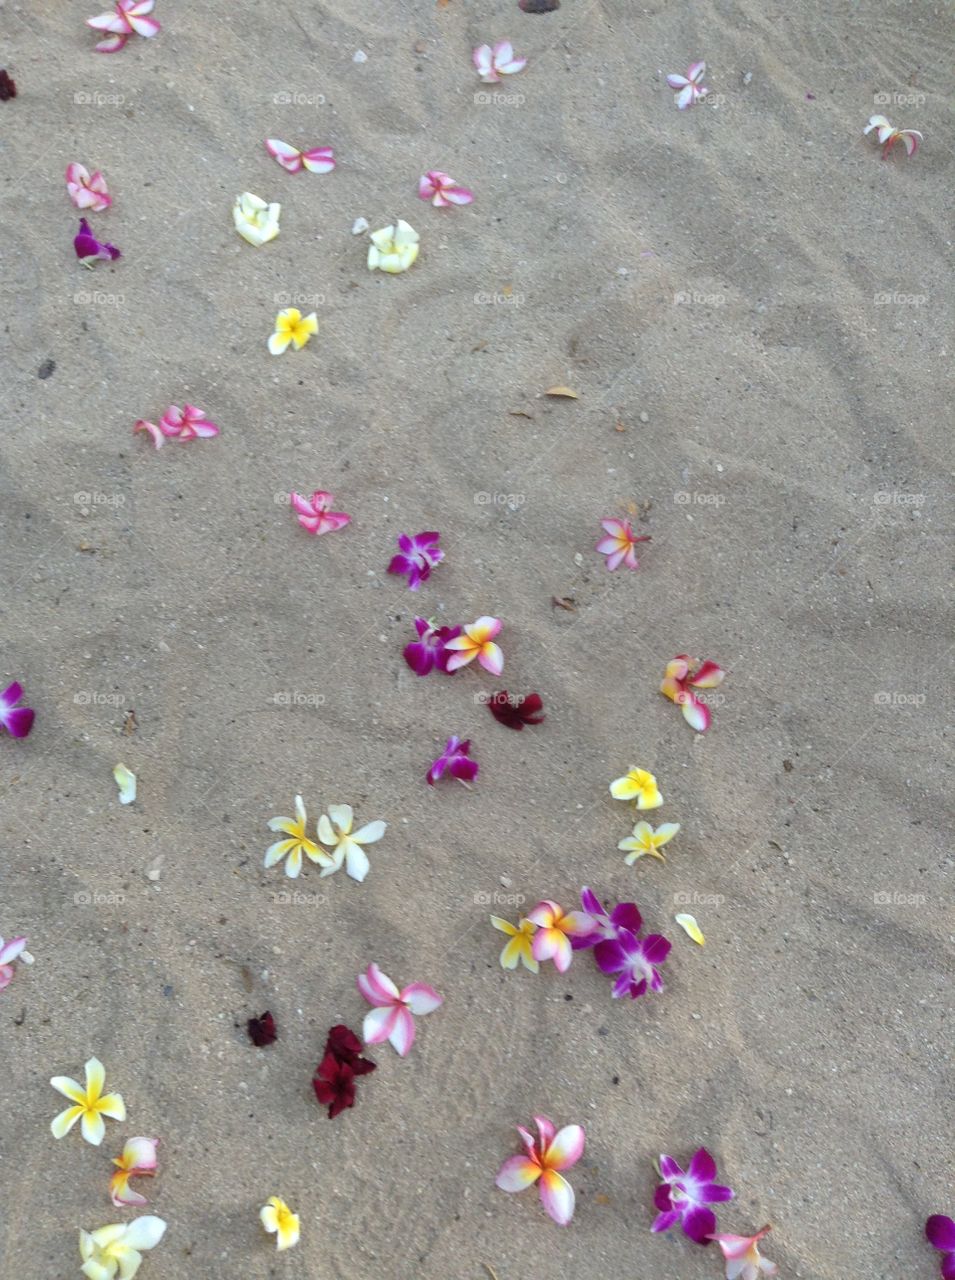 Plumerias on the Sand